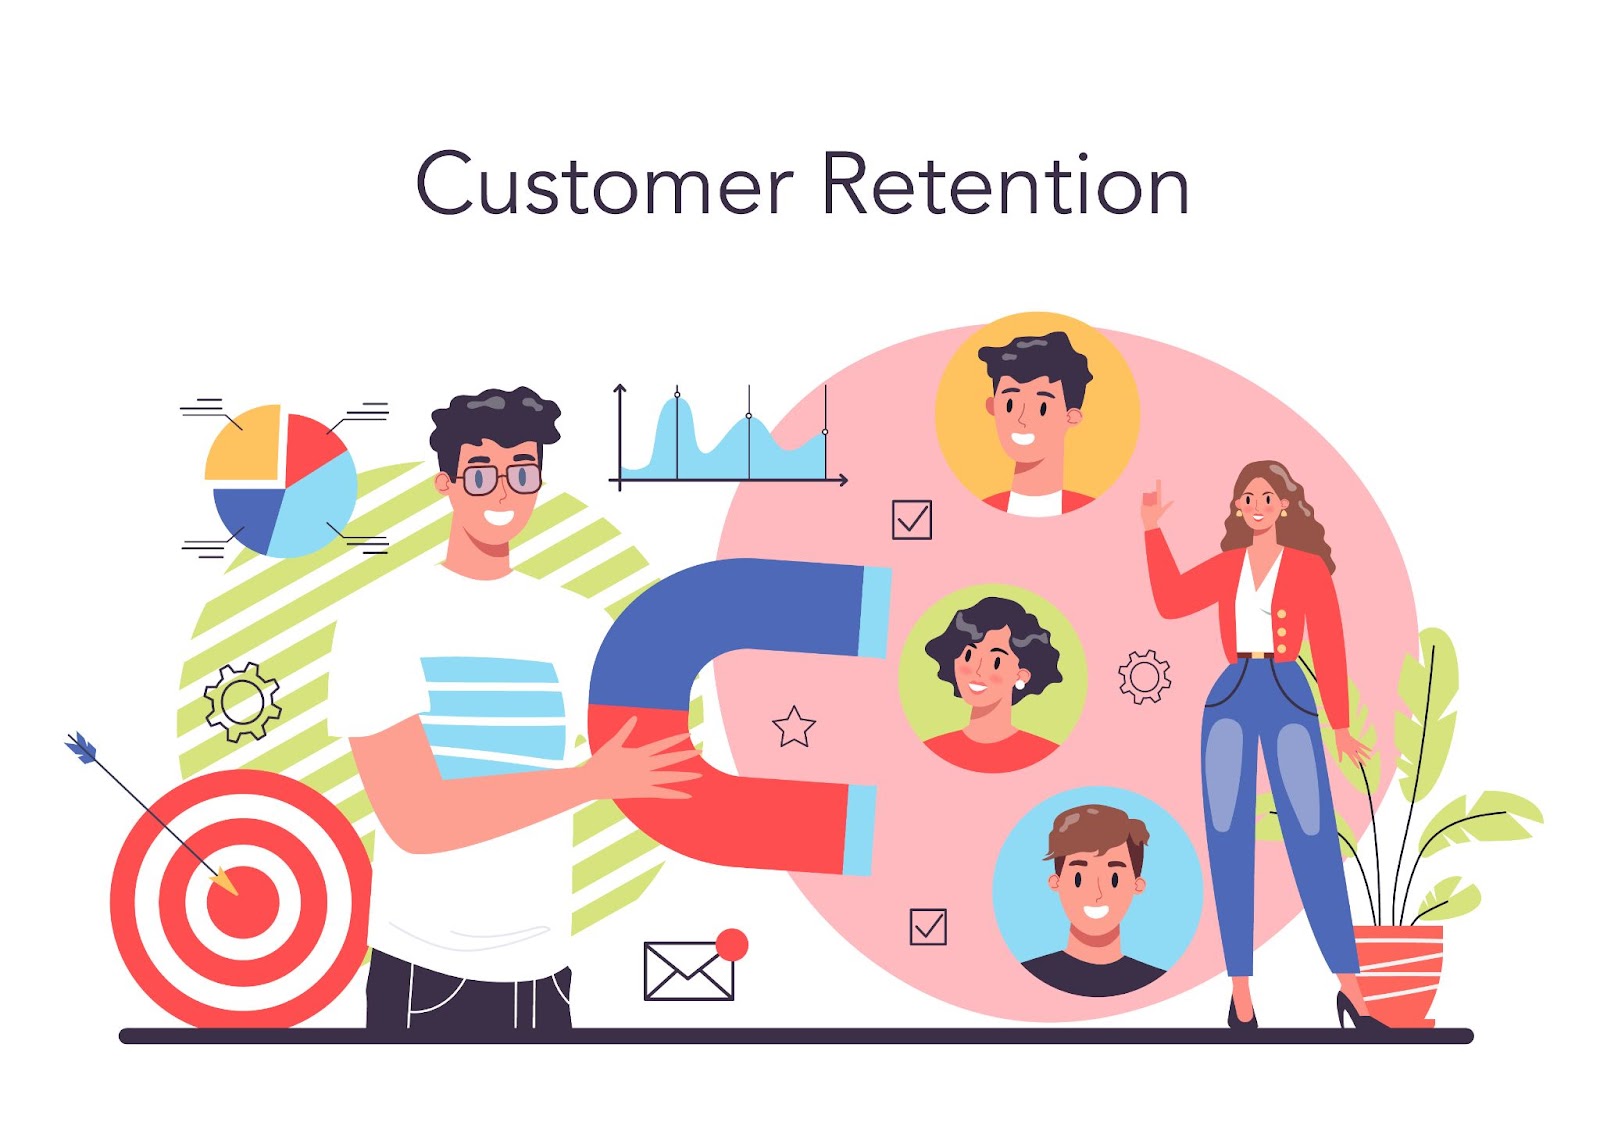 Positive customer experience improves customer retention 